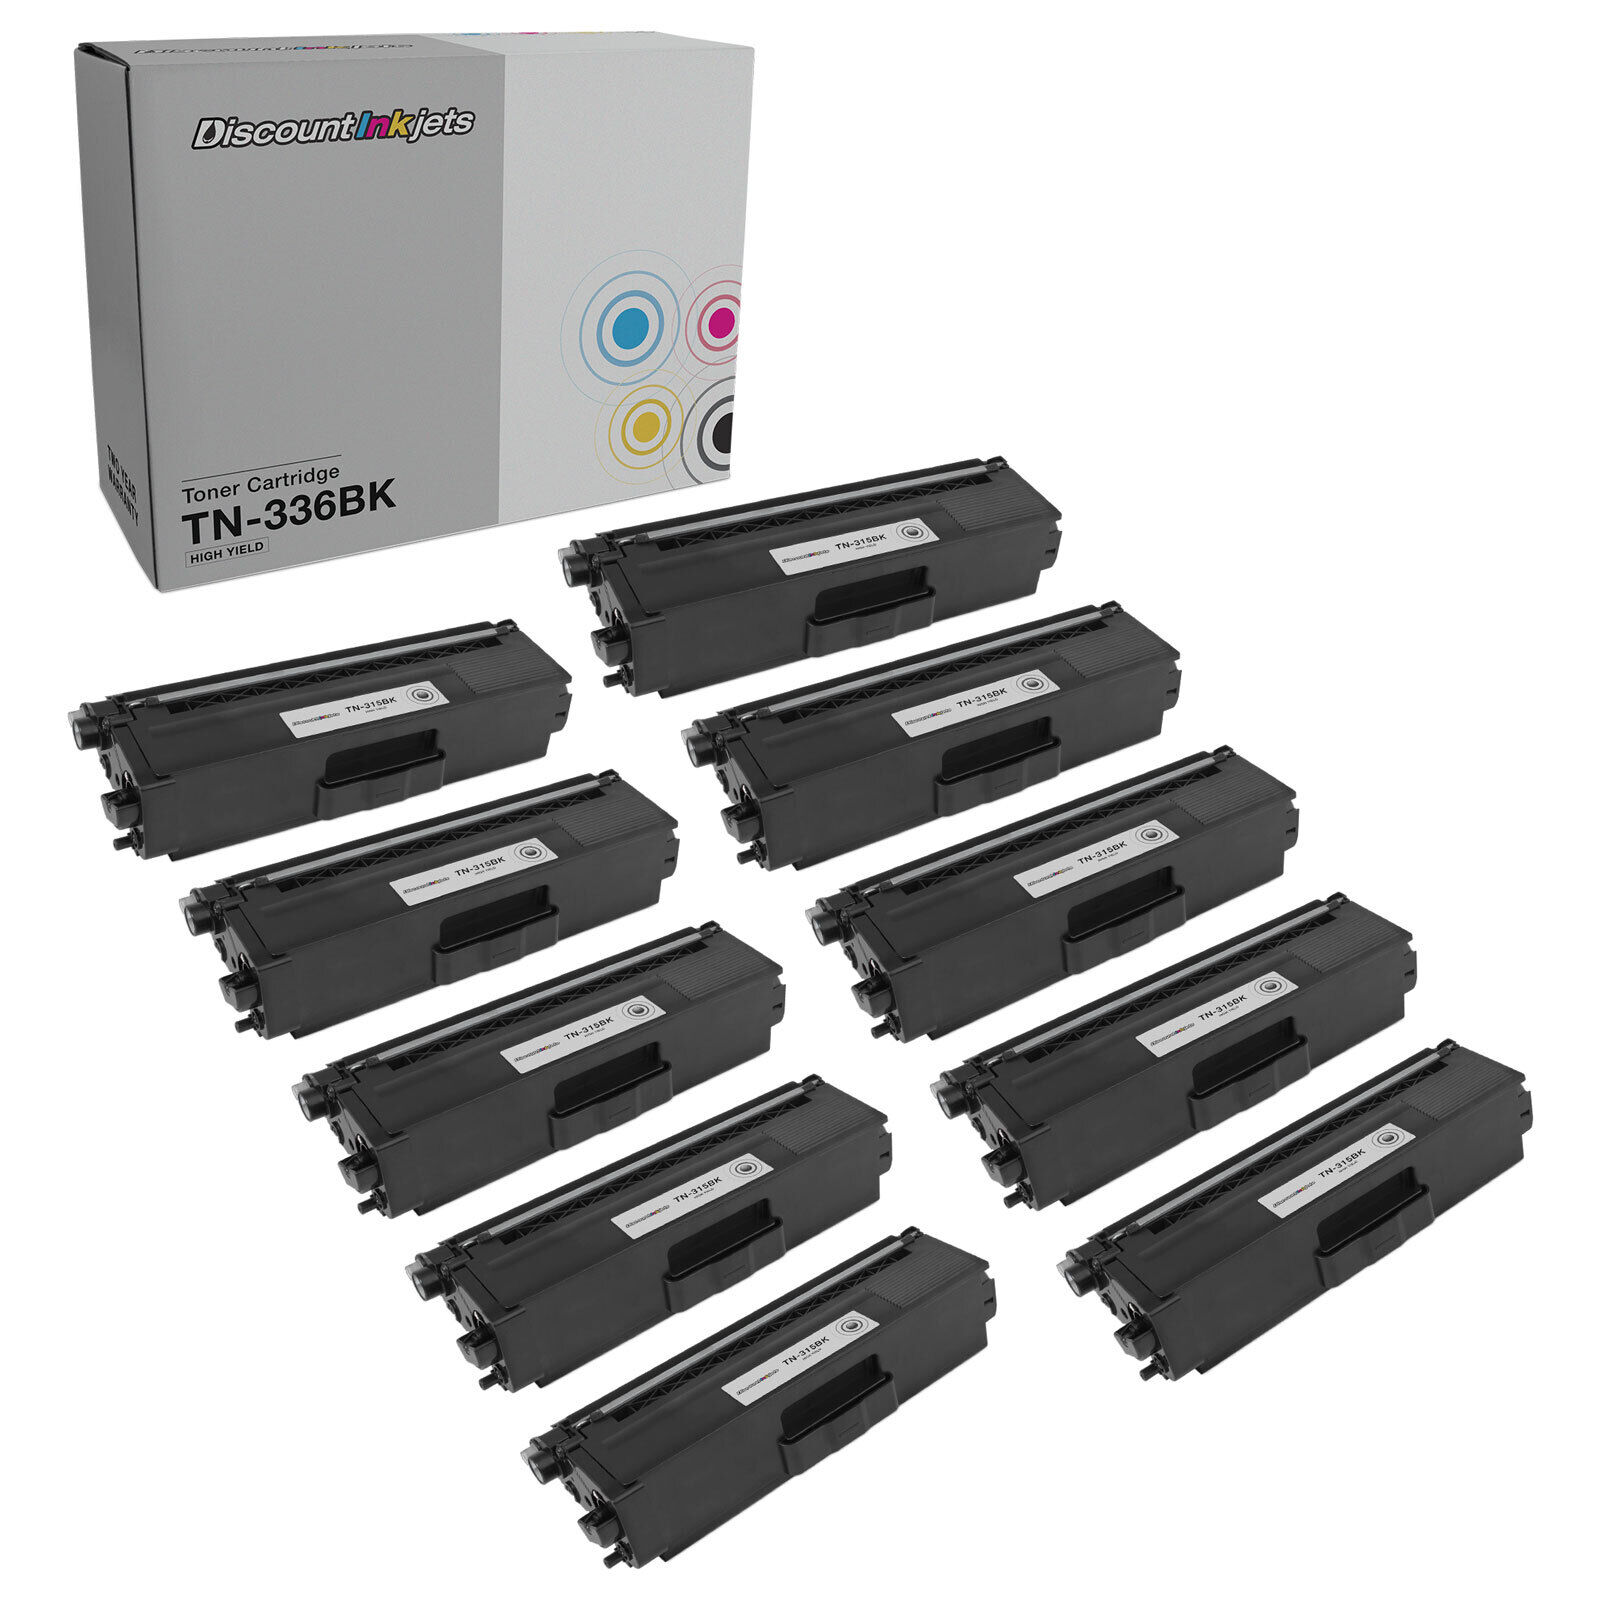 10 HY Black Printer Laser Toner Cartridges for Brother TN336 MFC-L8600CDW TN-336